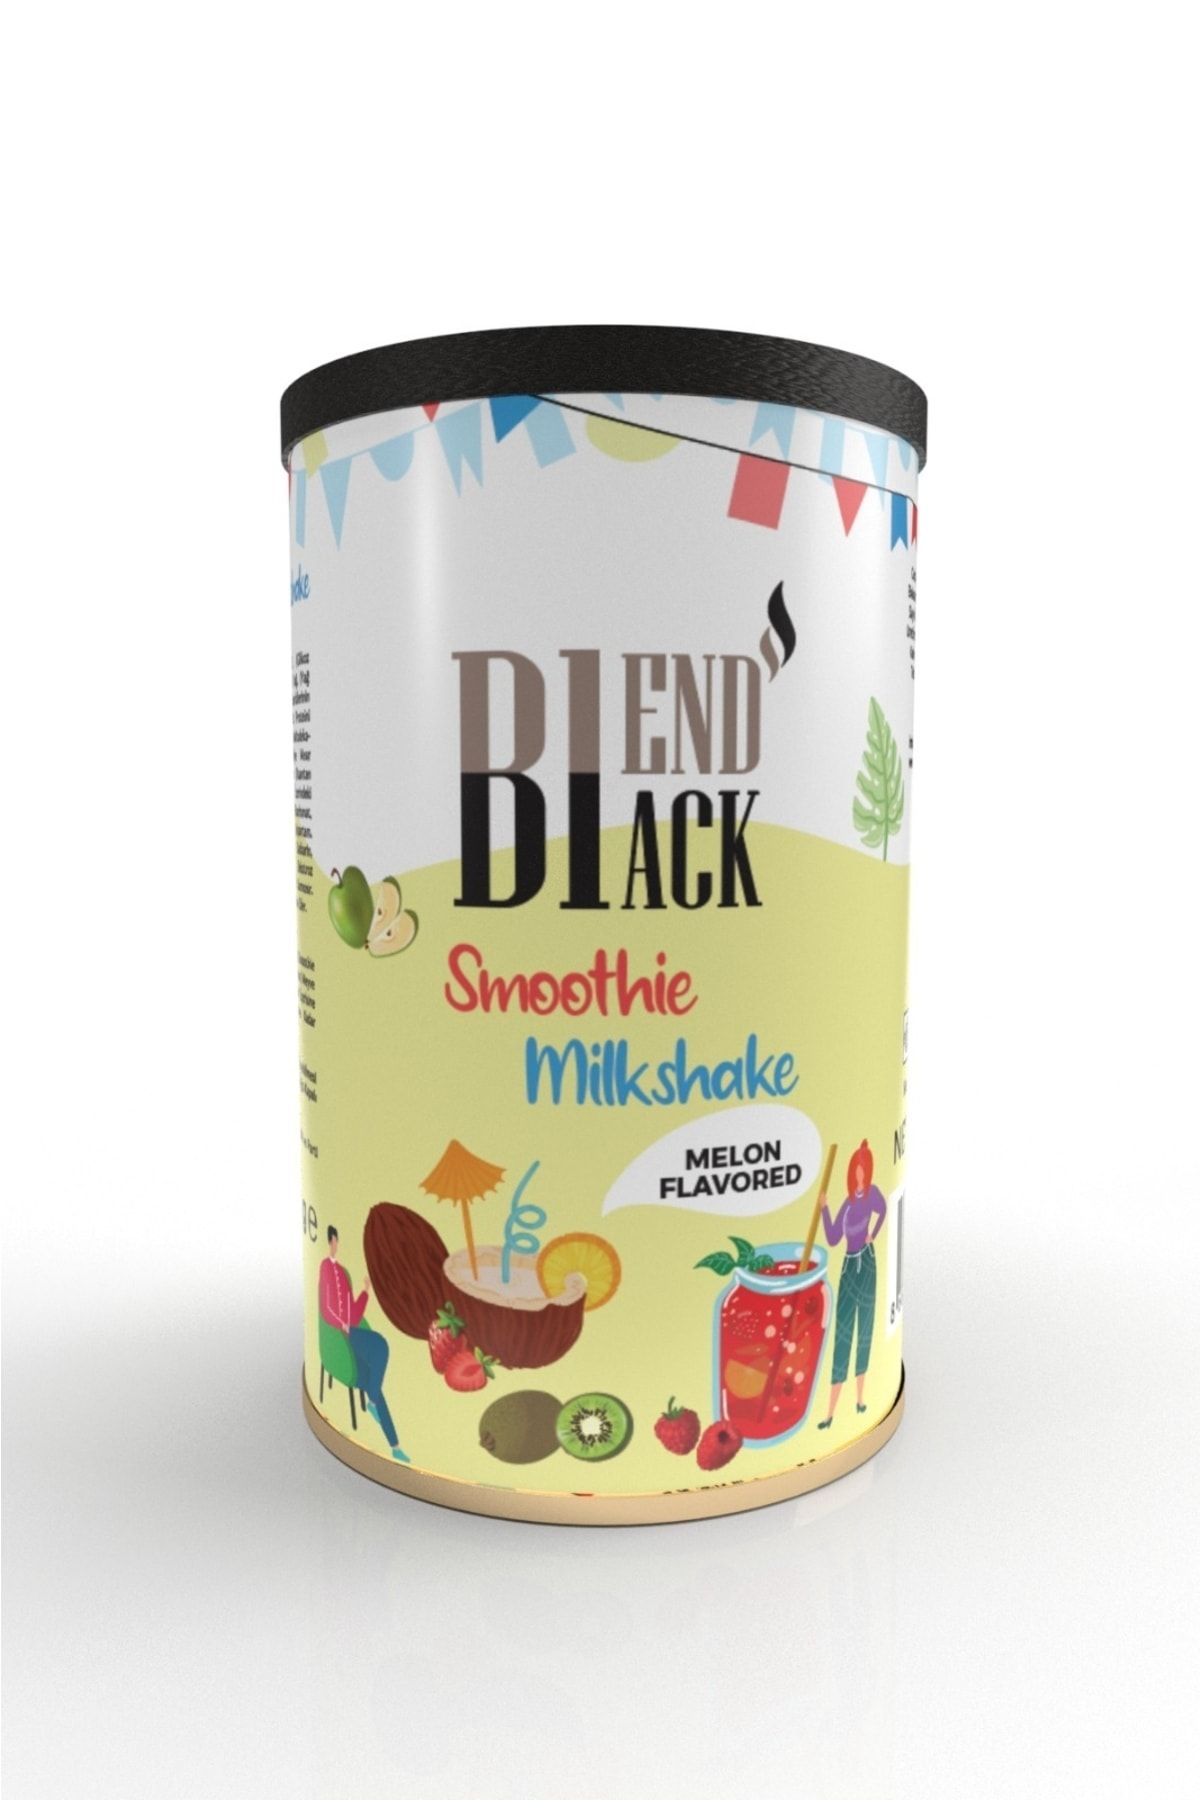 Blendblack Smoothie/milkshake Melon Flavored 500gr Teneke Kutu